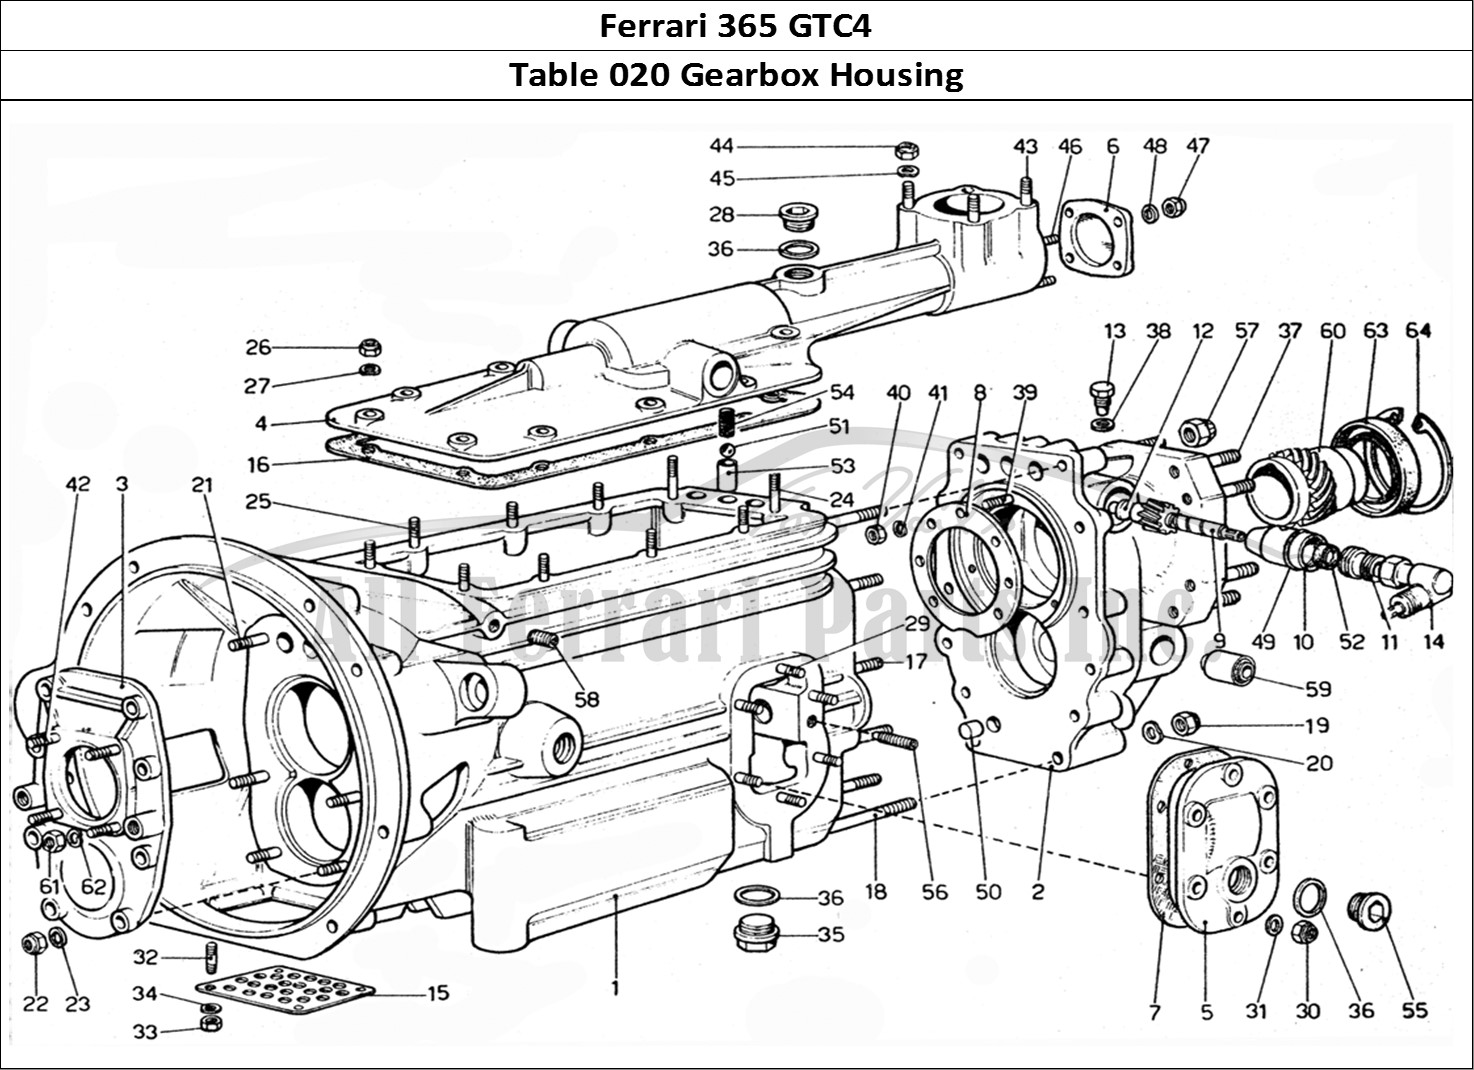 Ferrari Parts Ferrari 365 GTC4 (Mechanical) Page 020 Gearbox casing